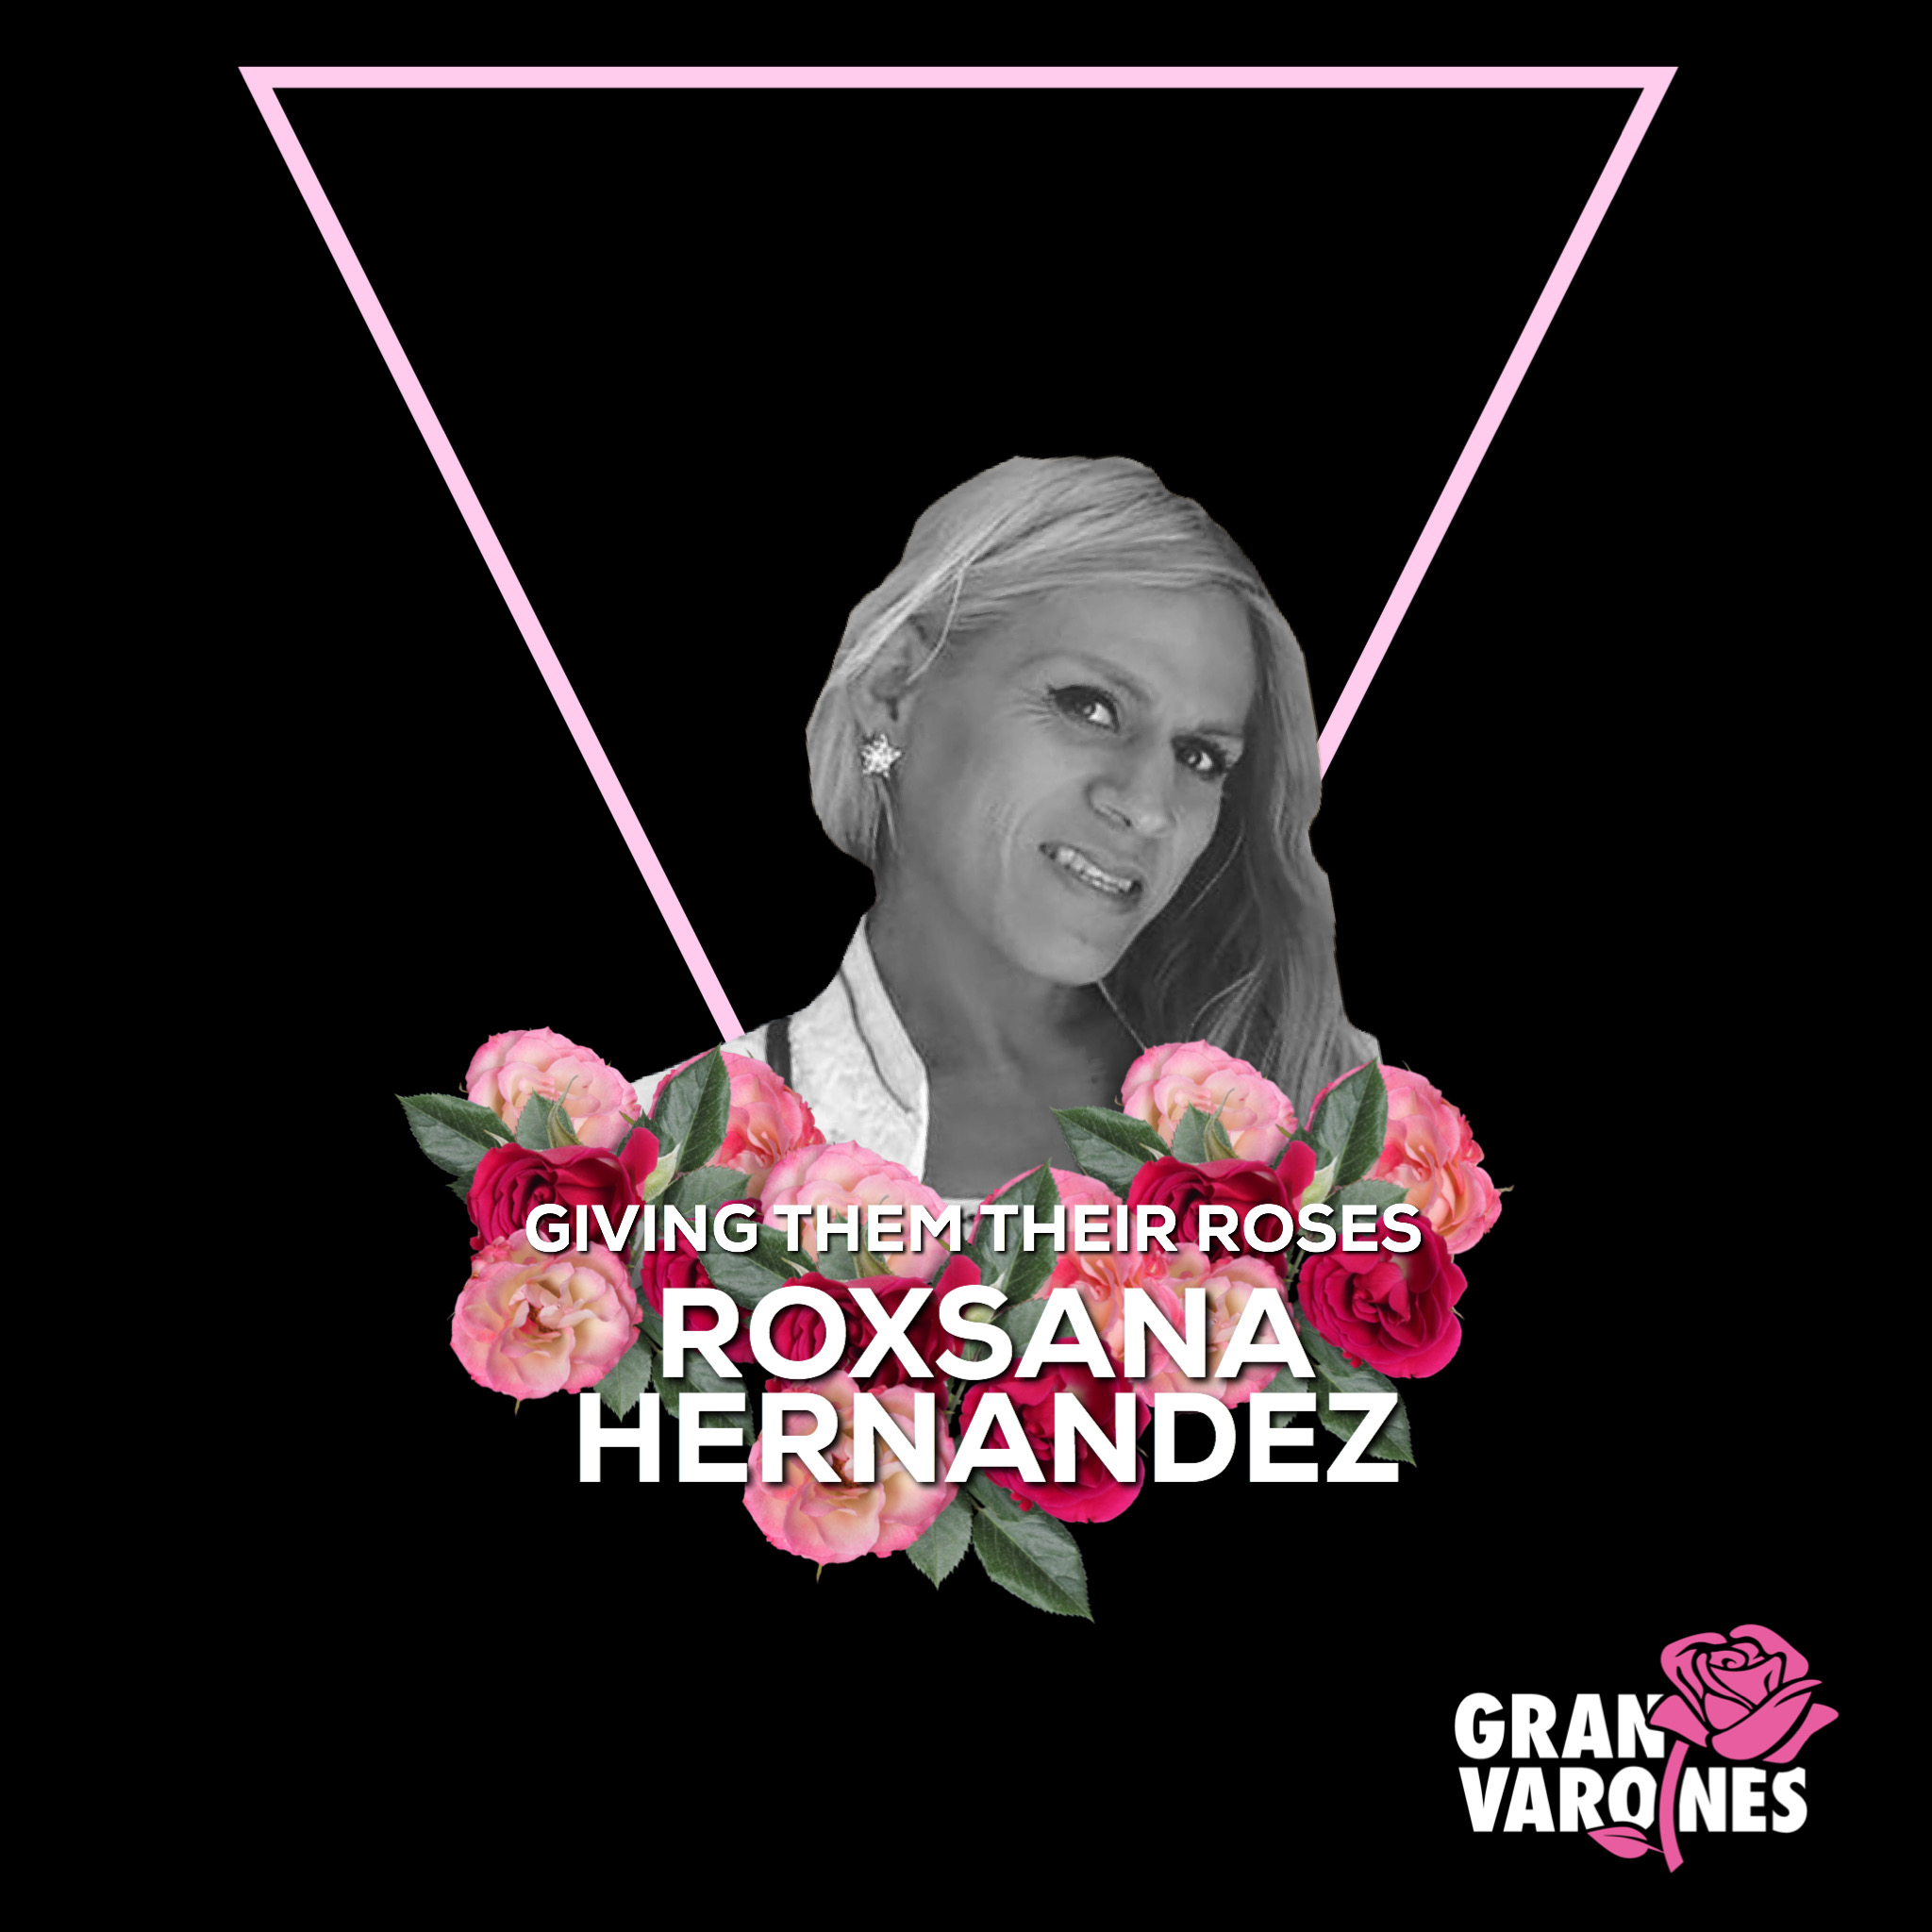 ROXSANA HERNANDEZ